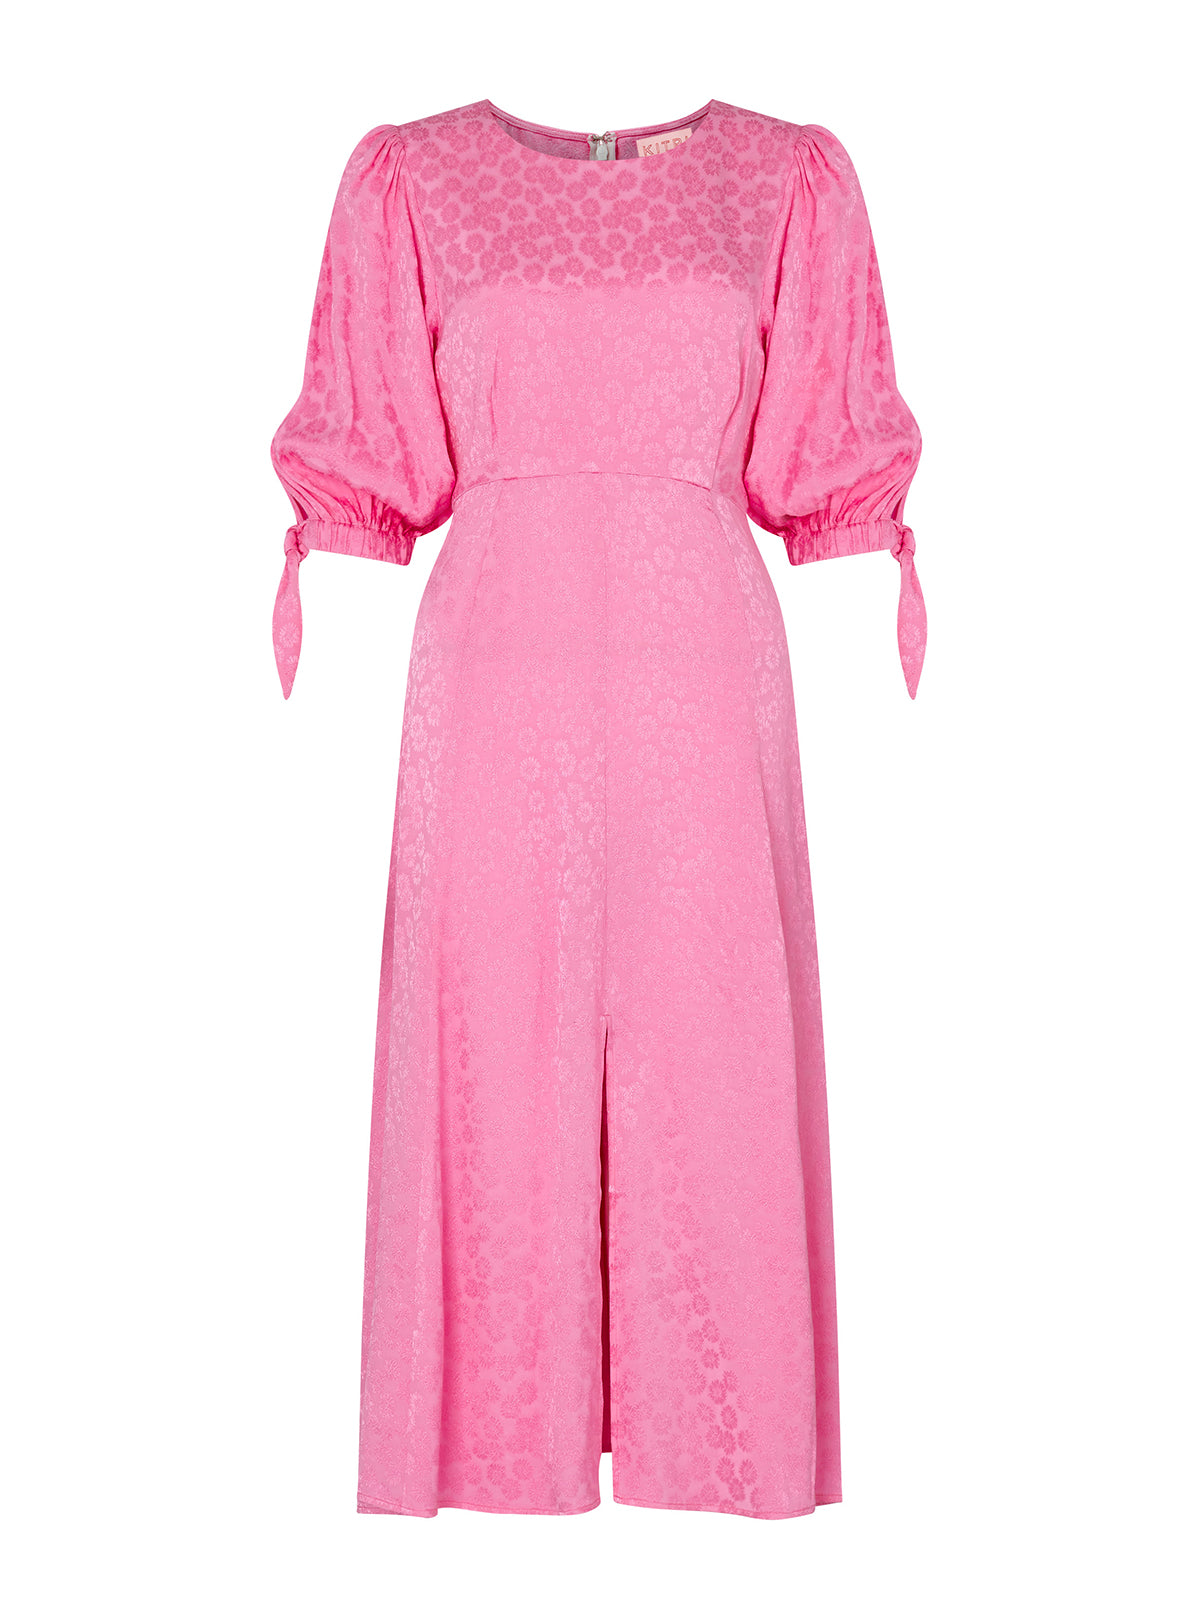 Lorelle Pink Daisy Jacquard Midi Dress by KITRI Studio